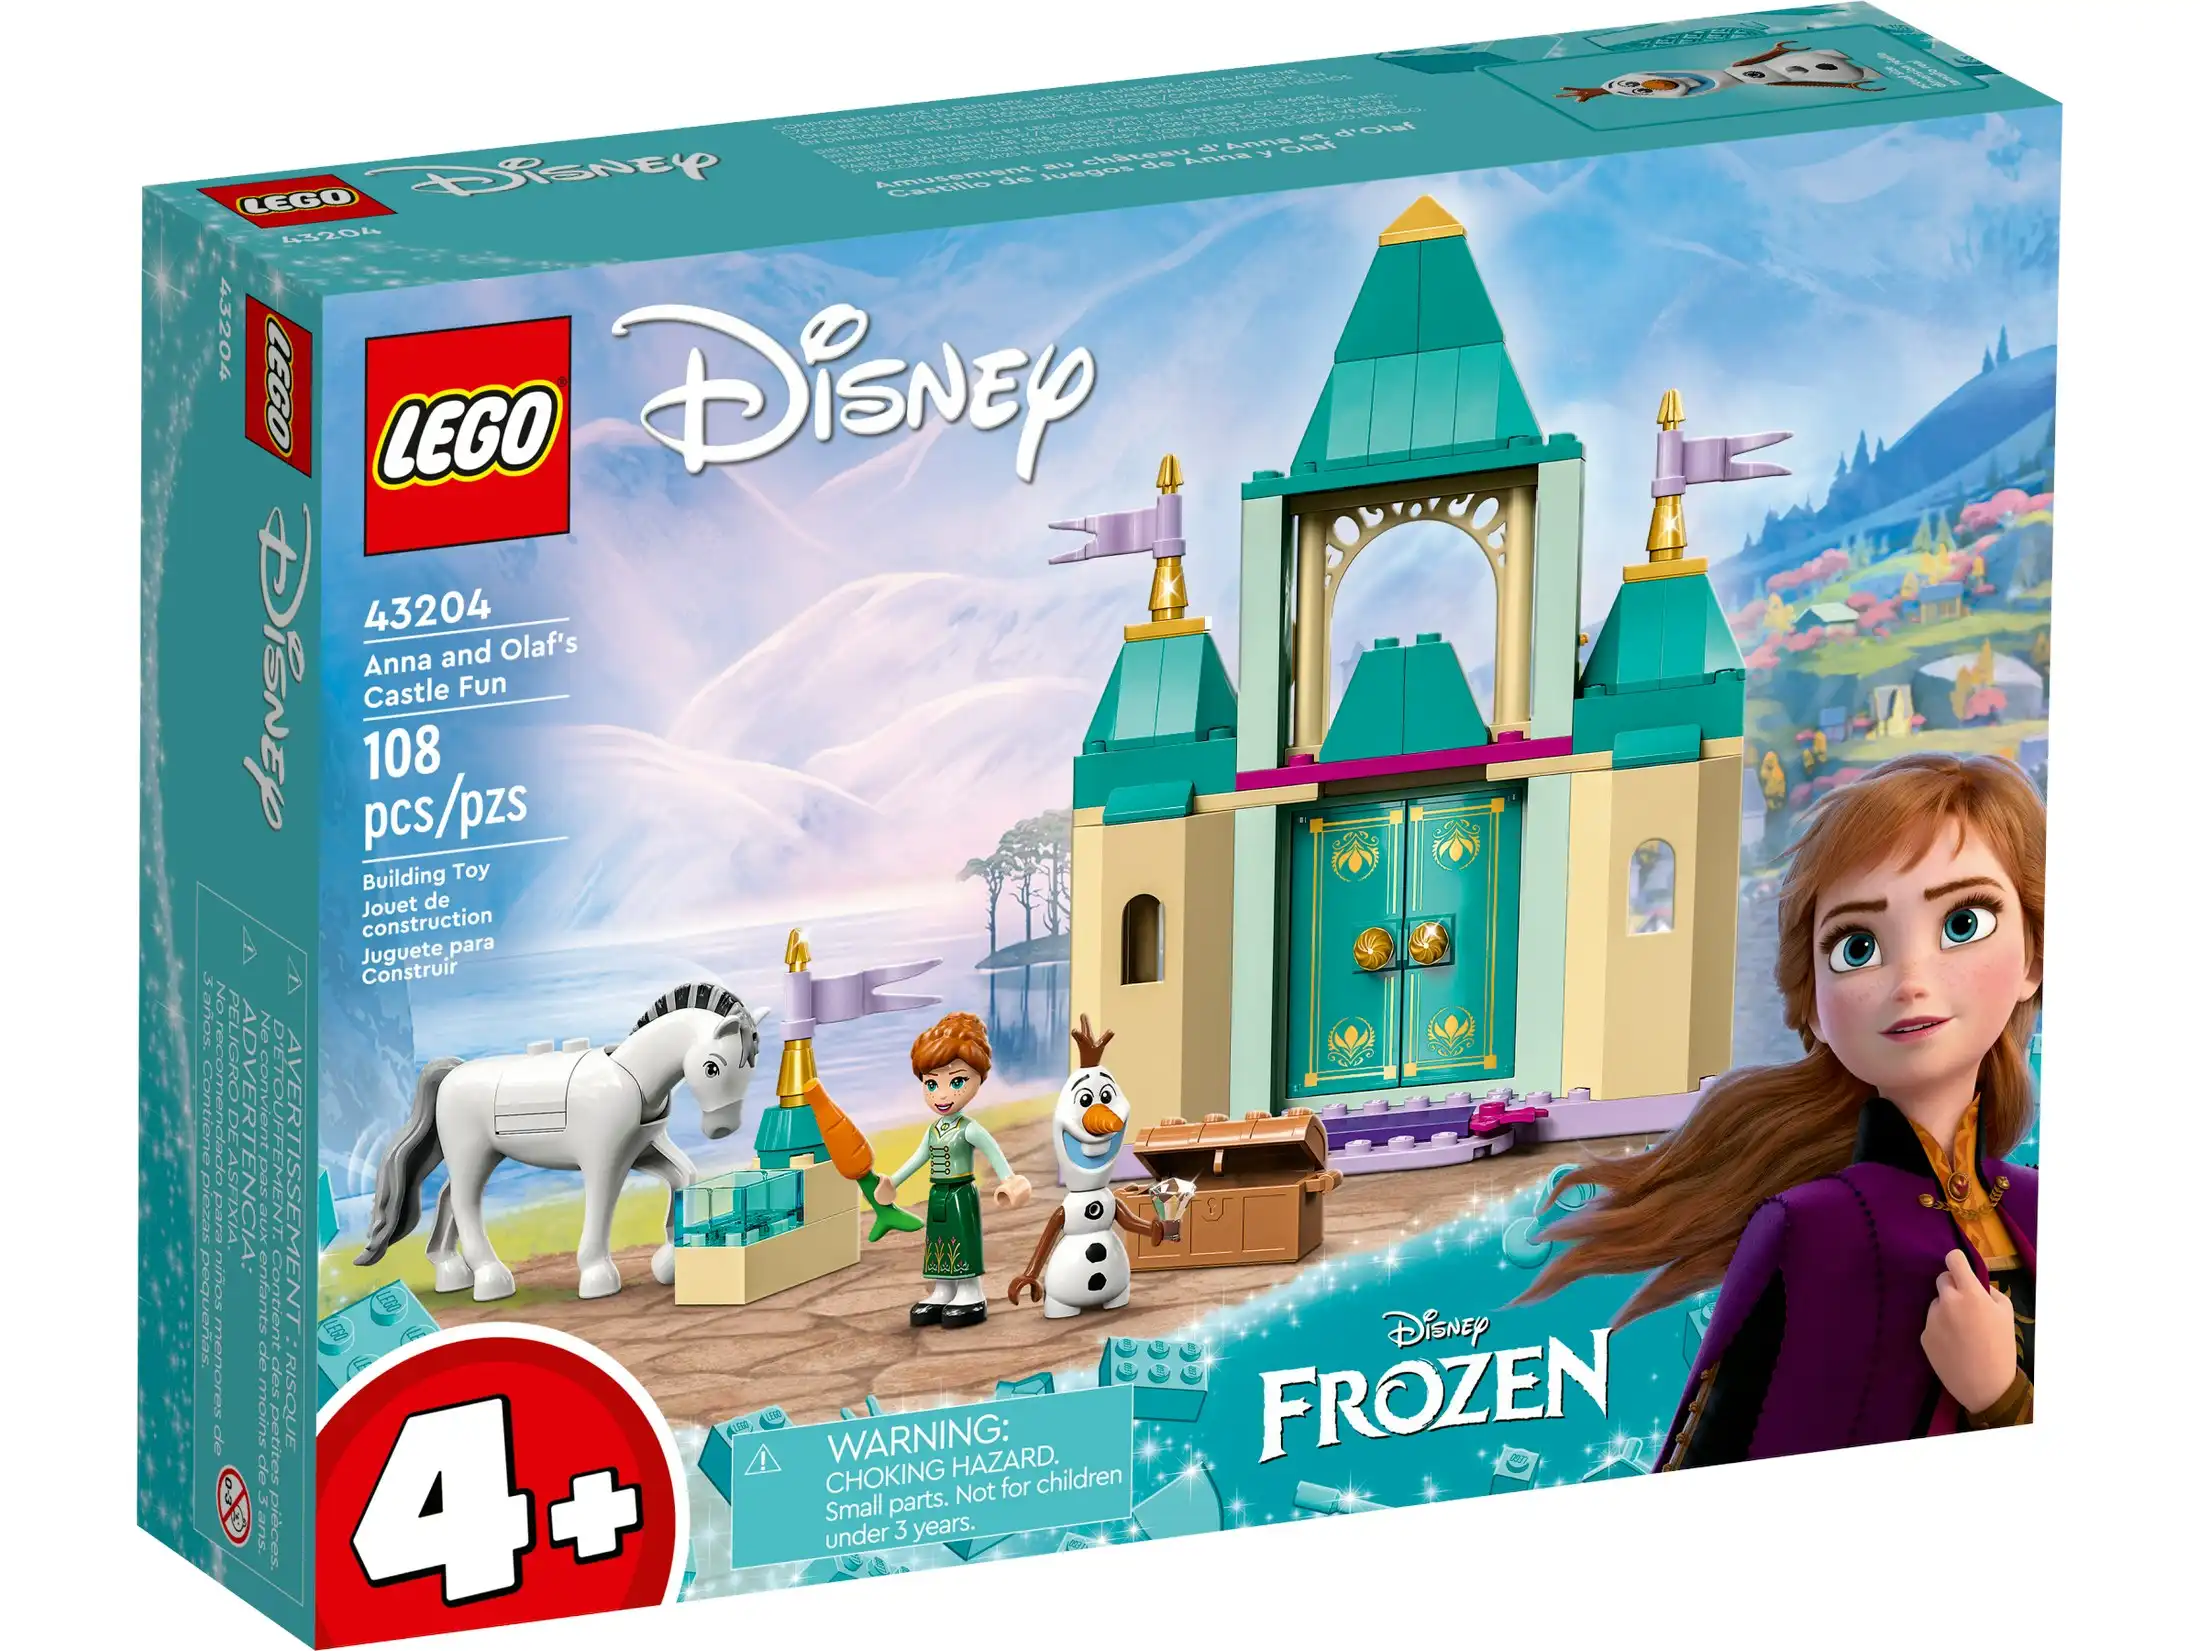 LEGO 43204 Anna and Olaf's Castle Fun - Disney Princess Frozen 4+